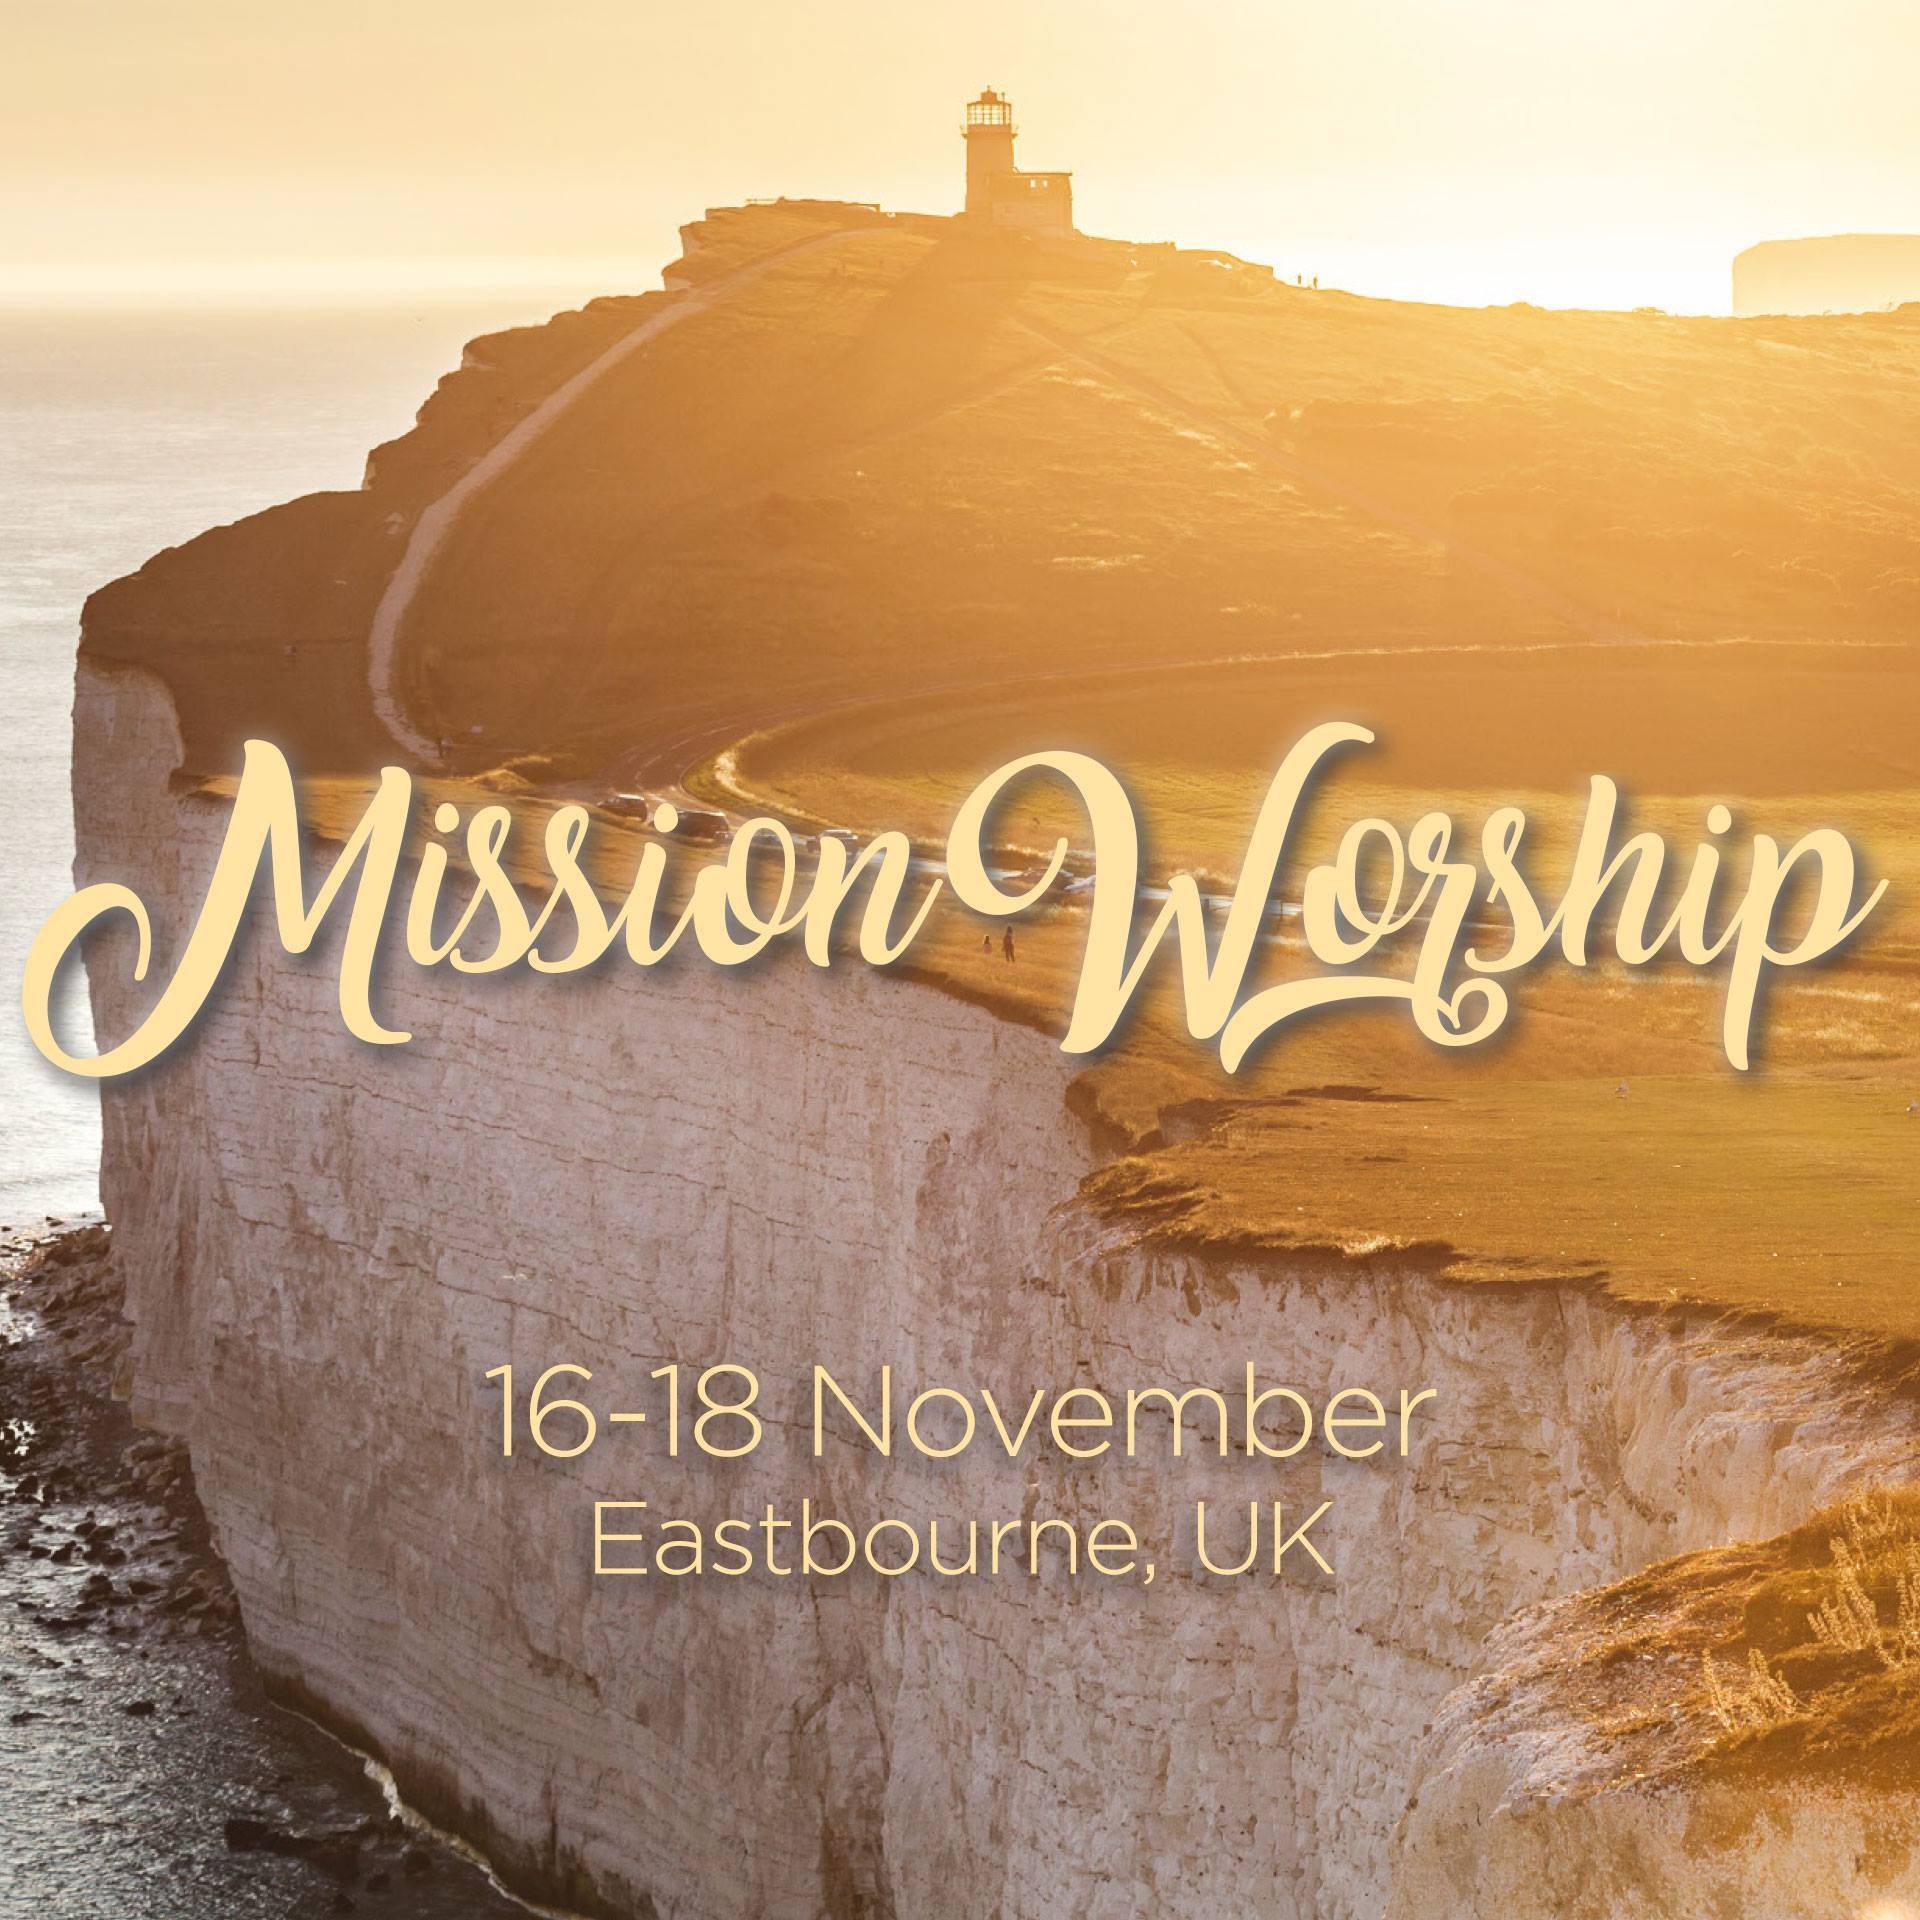 Mission Worship 2018 To Include KXC Worship, Elim Sound, Lucy Grimble, Graham Kendrick, Pete James